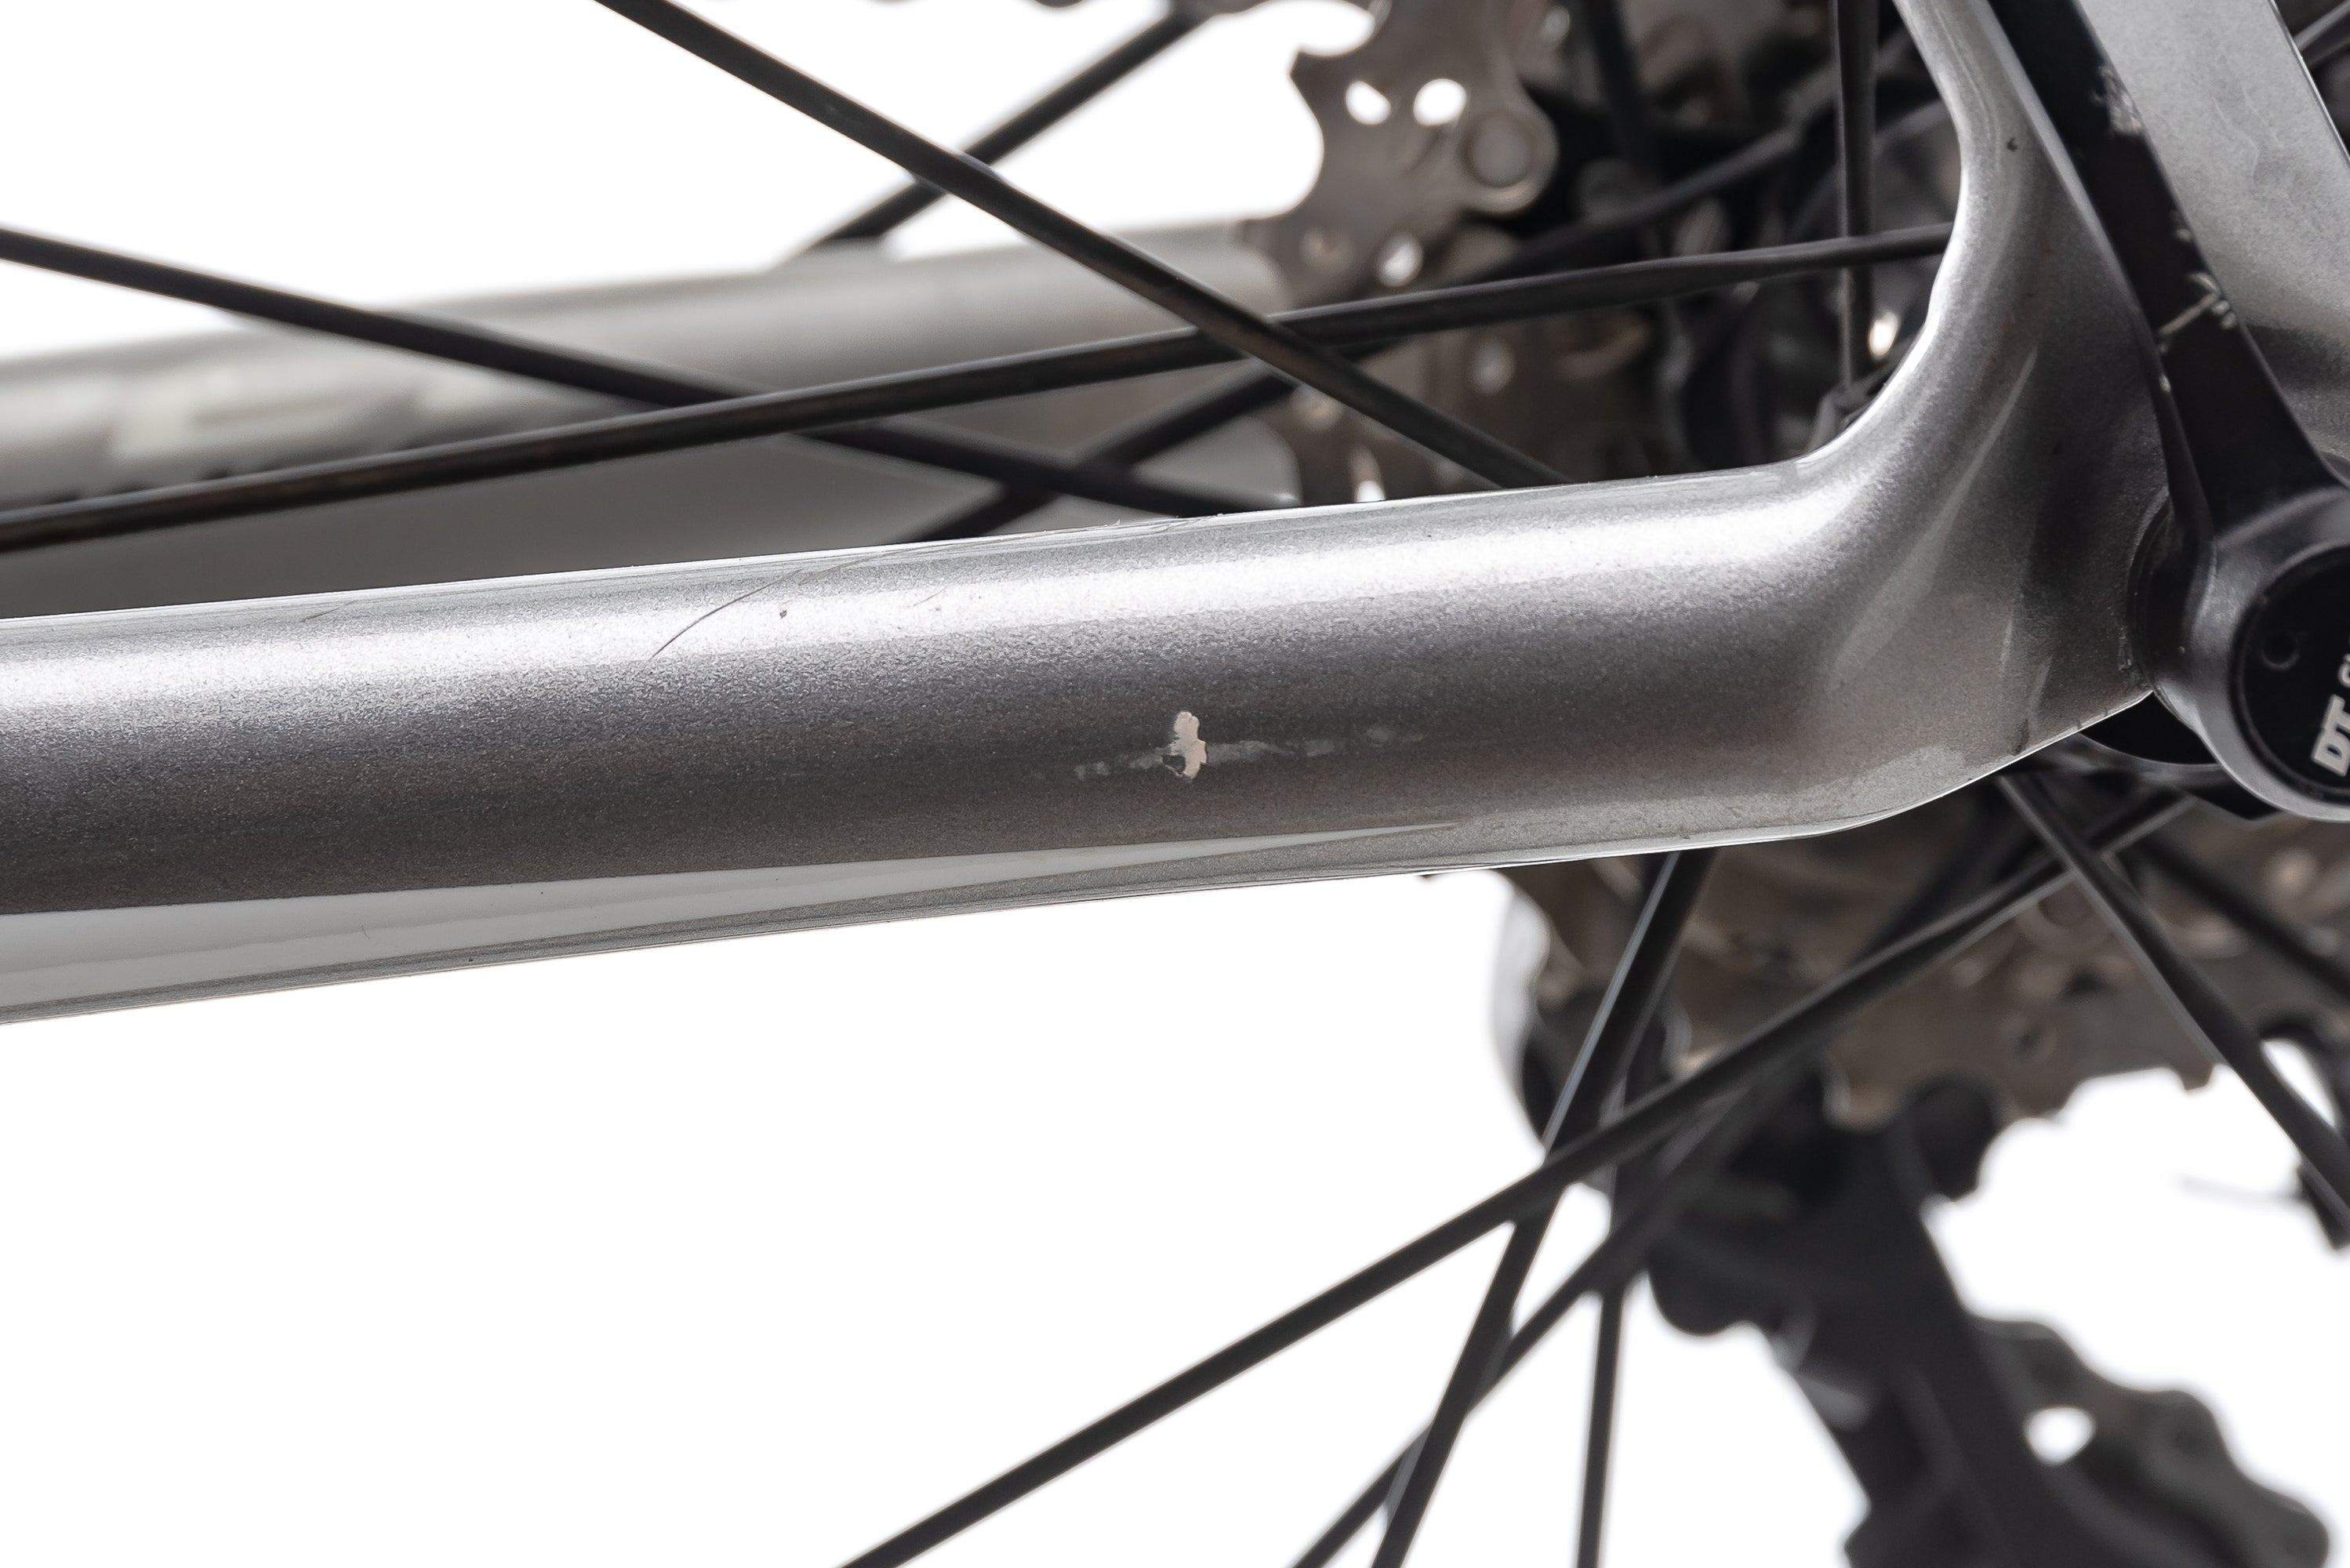 Giant Propel Advanced 2 Road Bike - 2015, Large detail 1